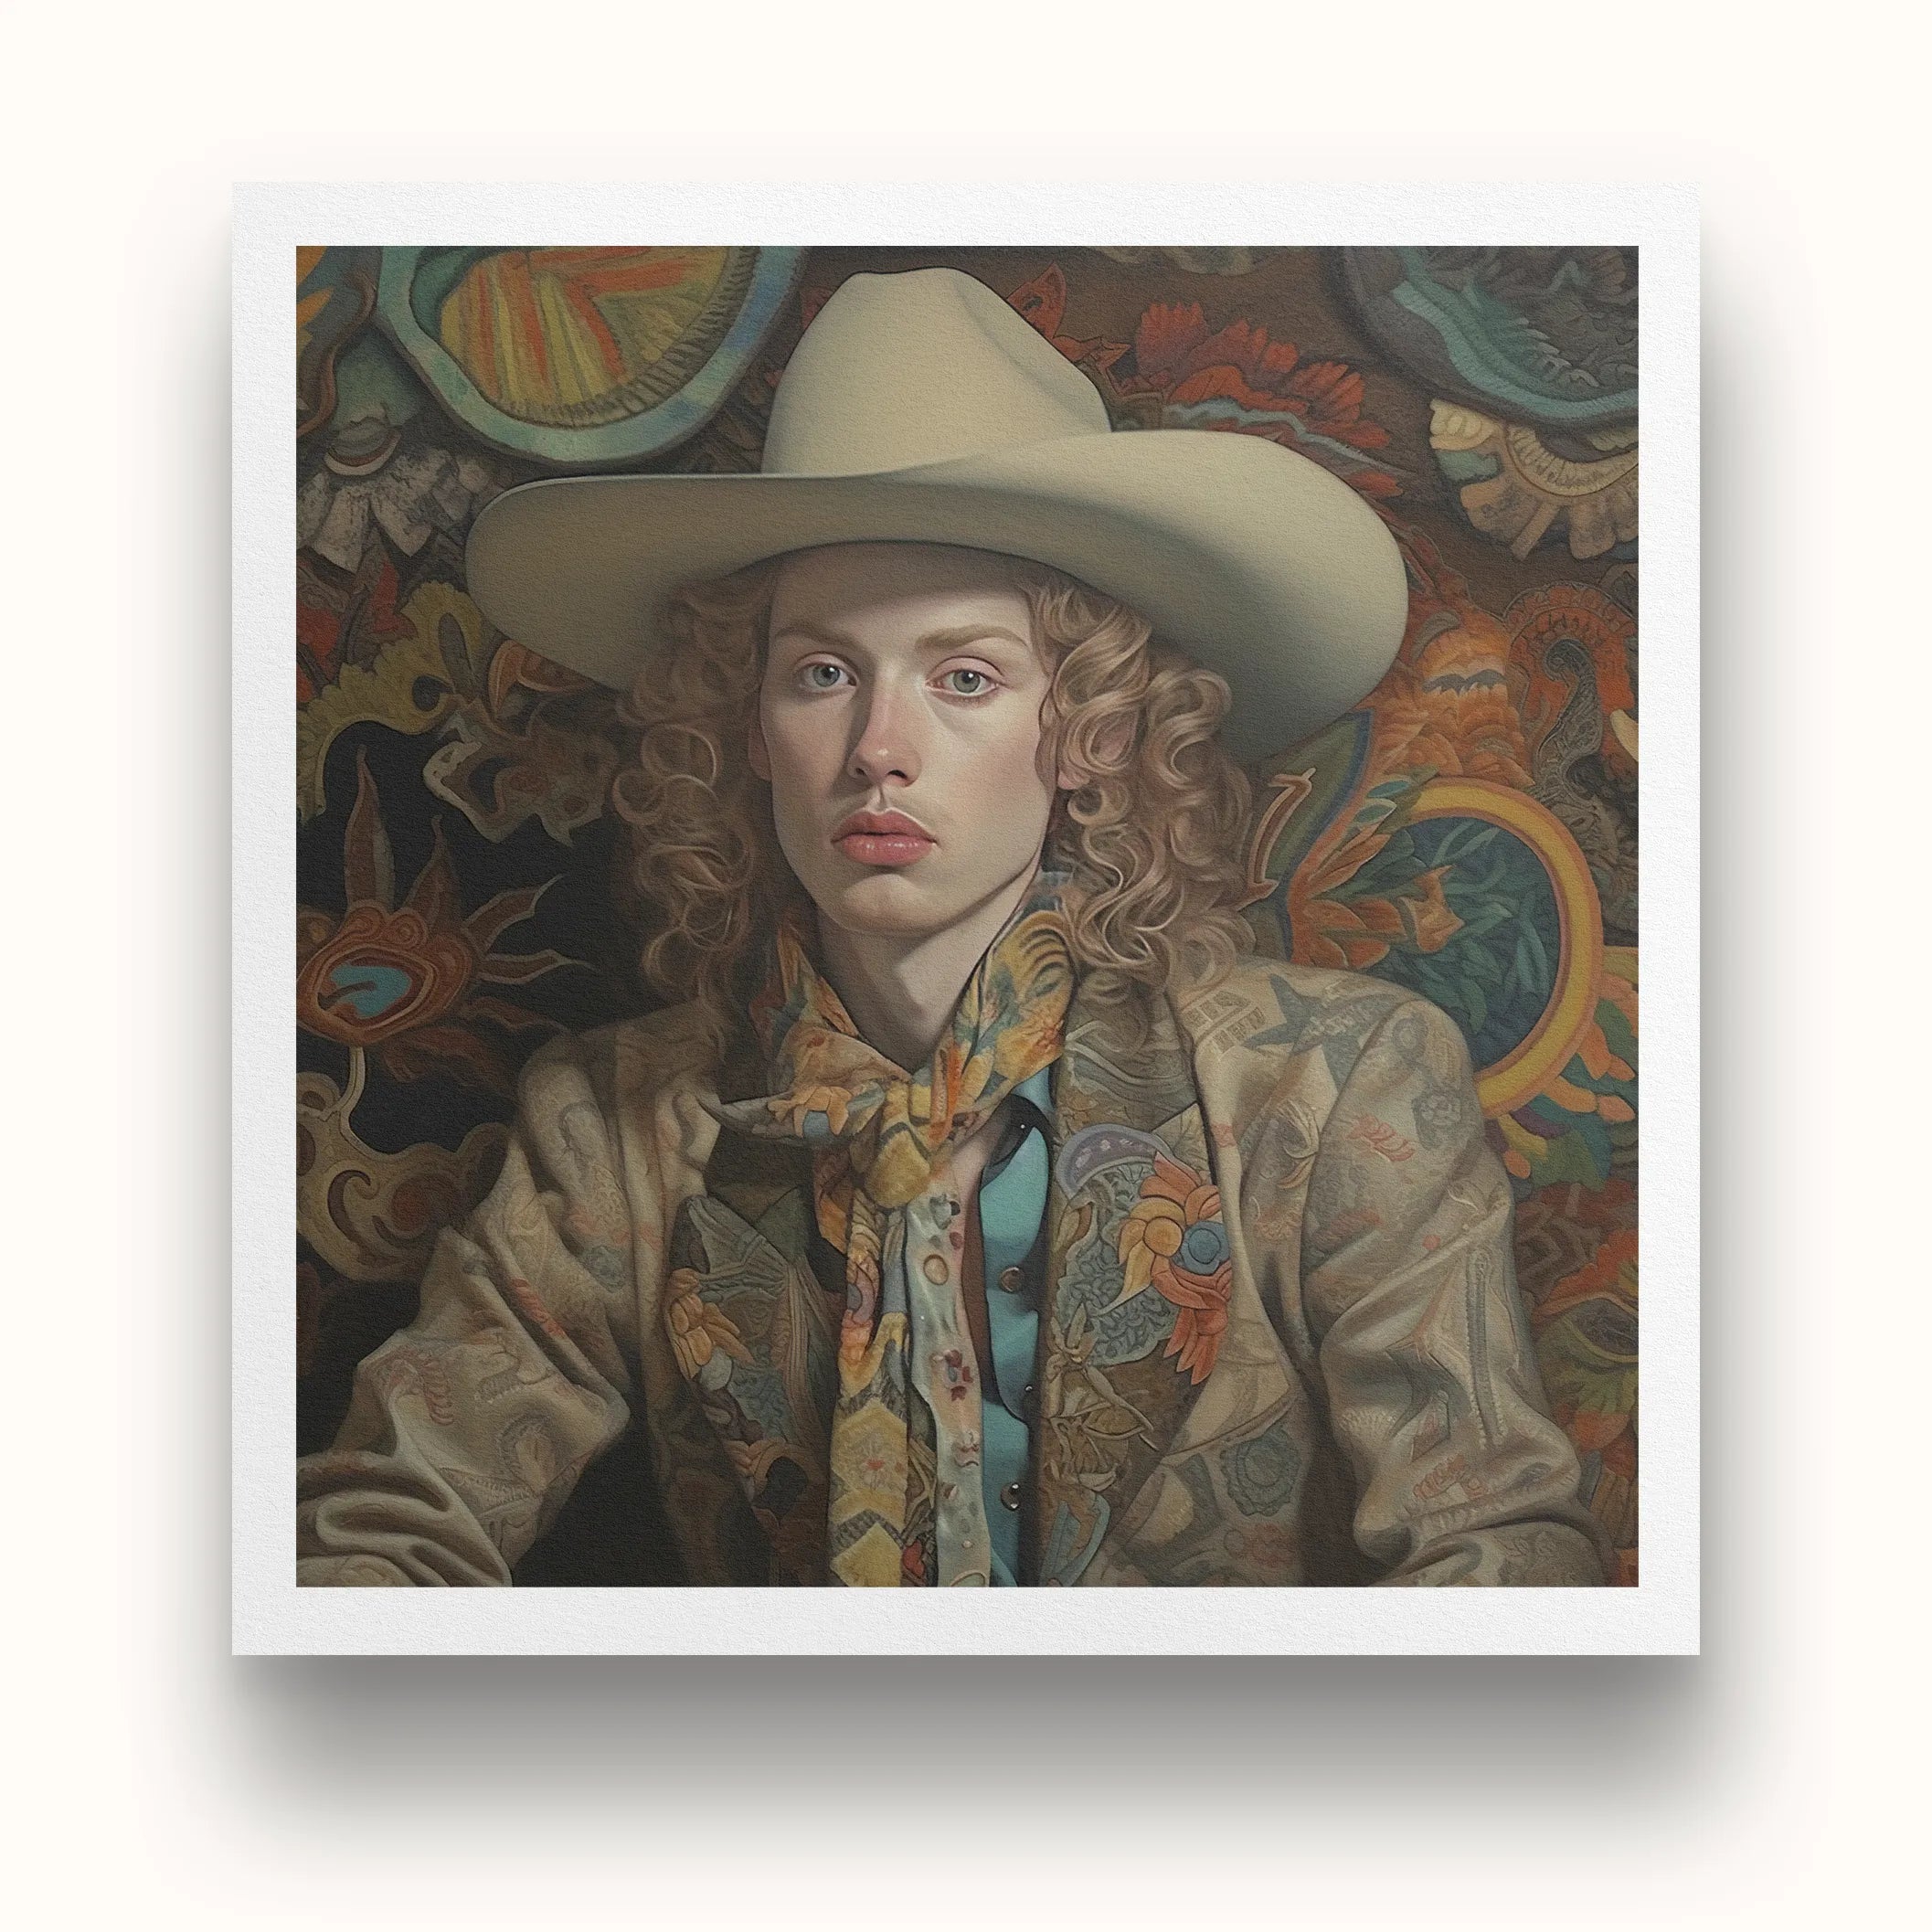 Ollie The Transgender Cowboy - F2m Dandy Transman Art Print - Posters Prints & Visual Artwork - Aesthetic Art